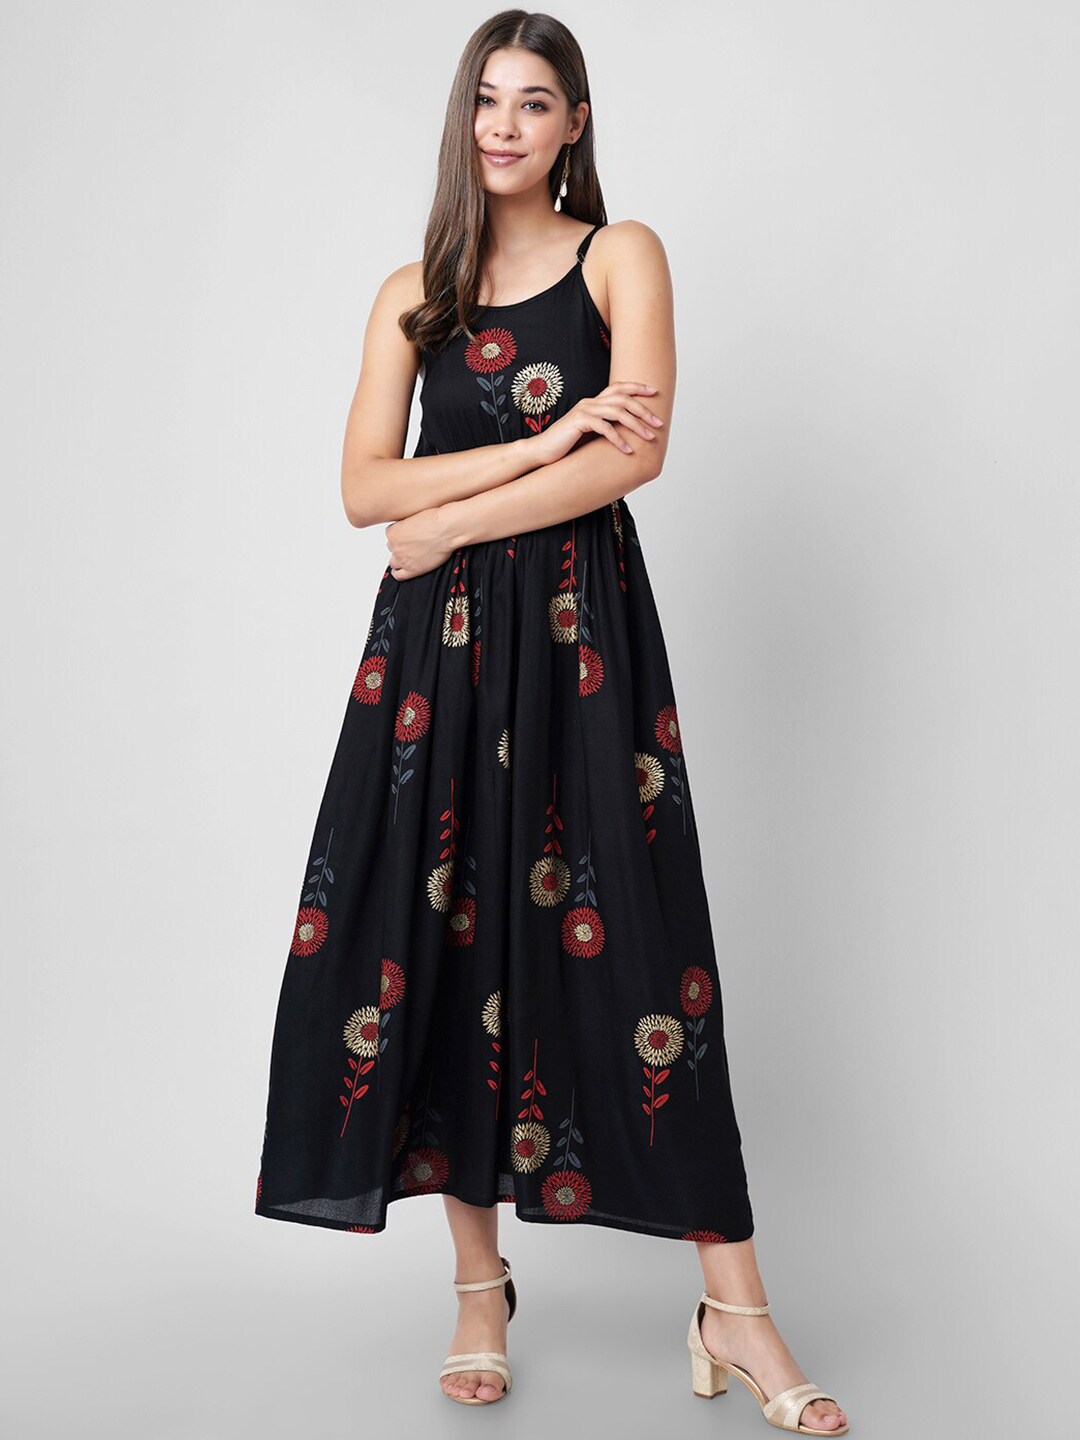 PURSHOTTAM WALA Floral Ethnic Maxi Dress Price in India